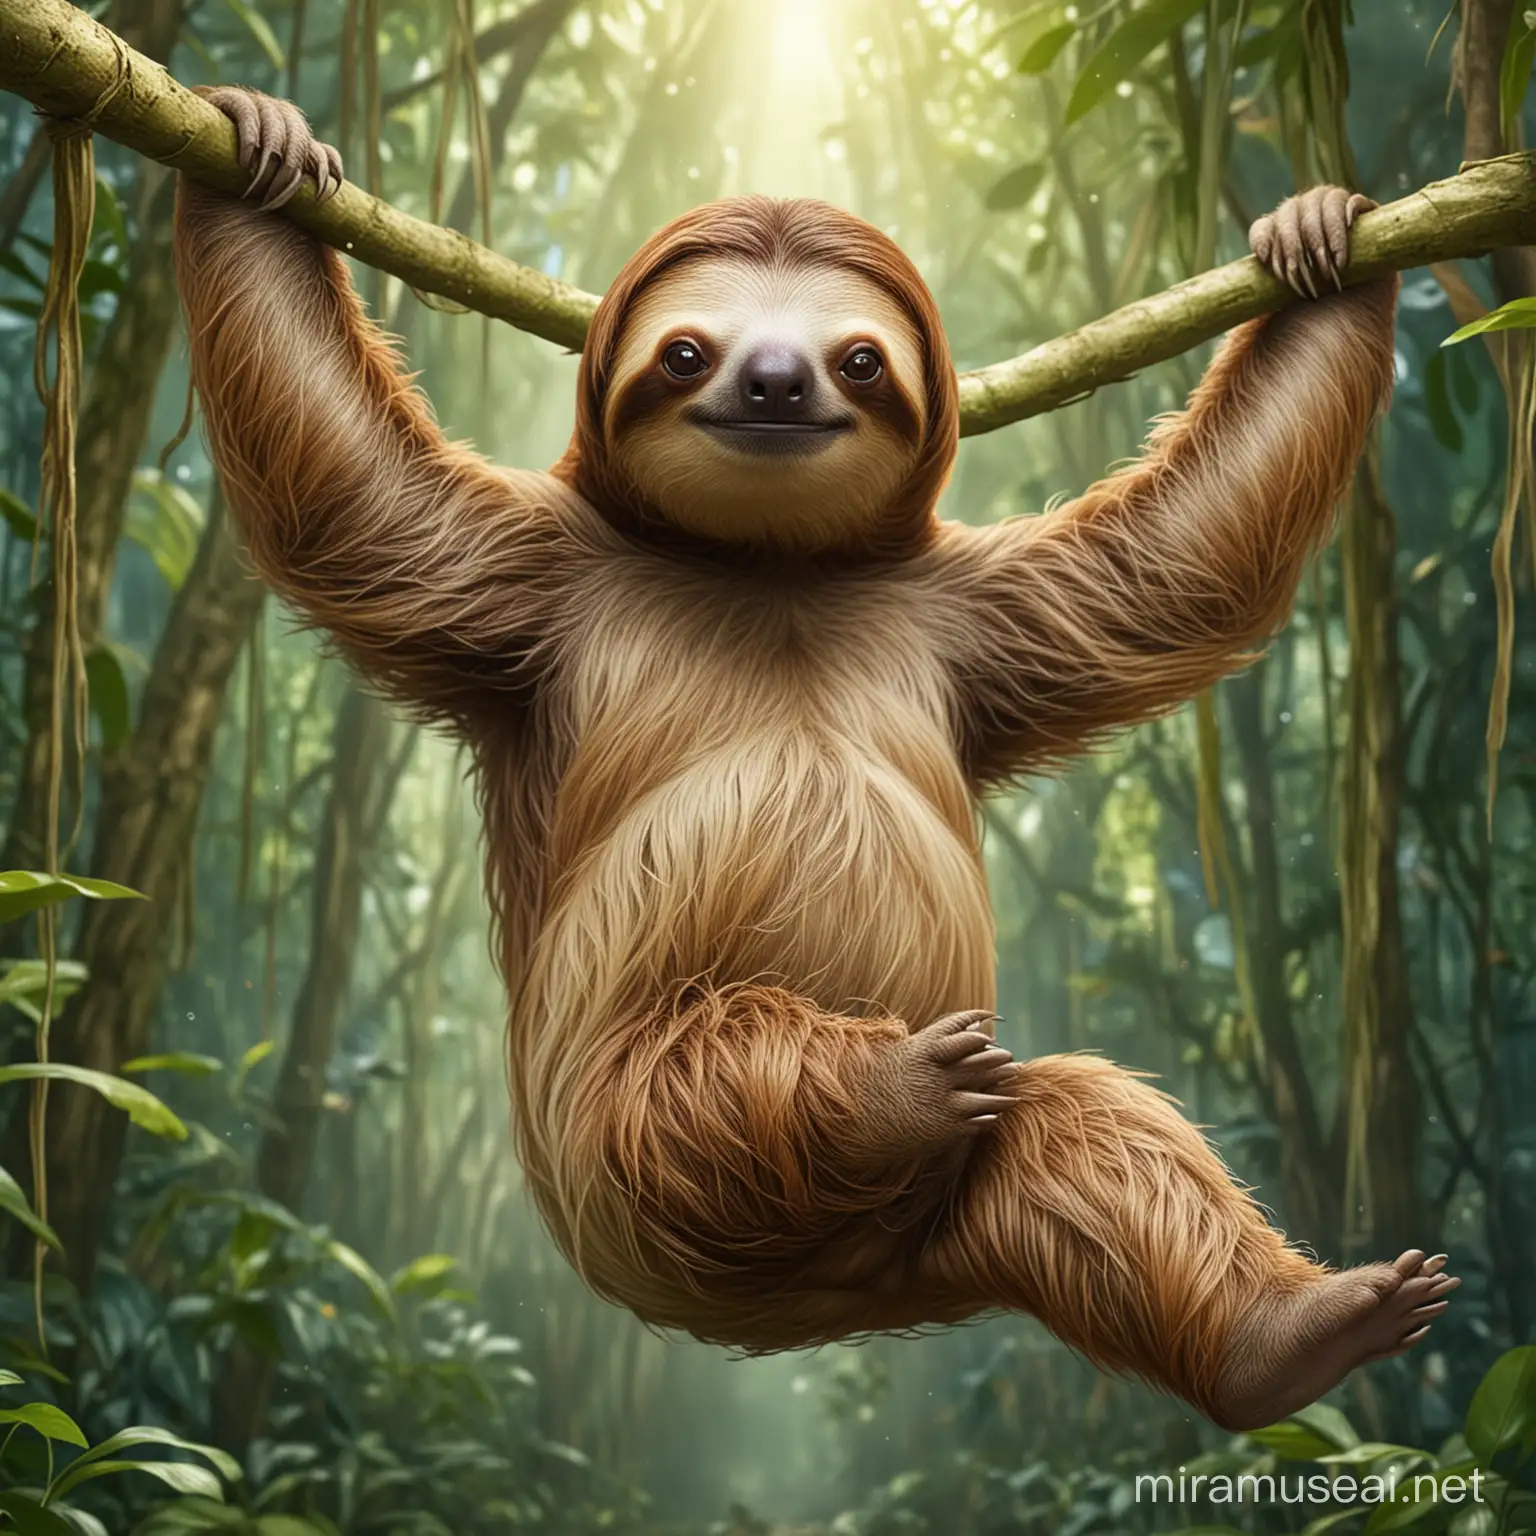 Humanized Sloth Enjoying a Lazy Day in the Sunshine